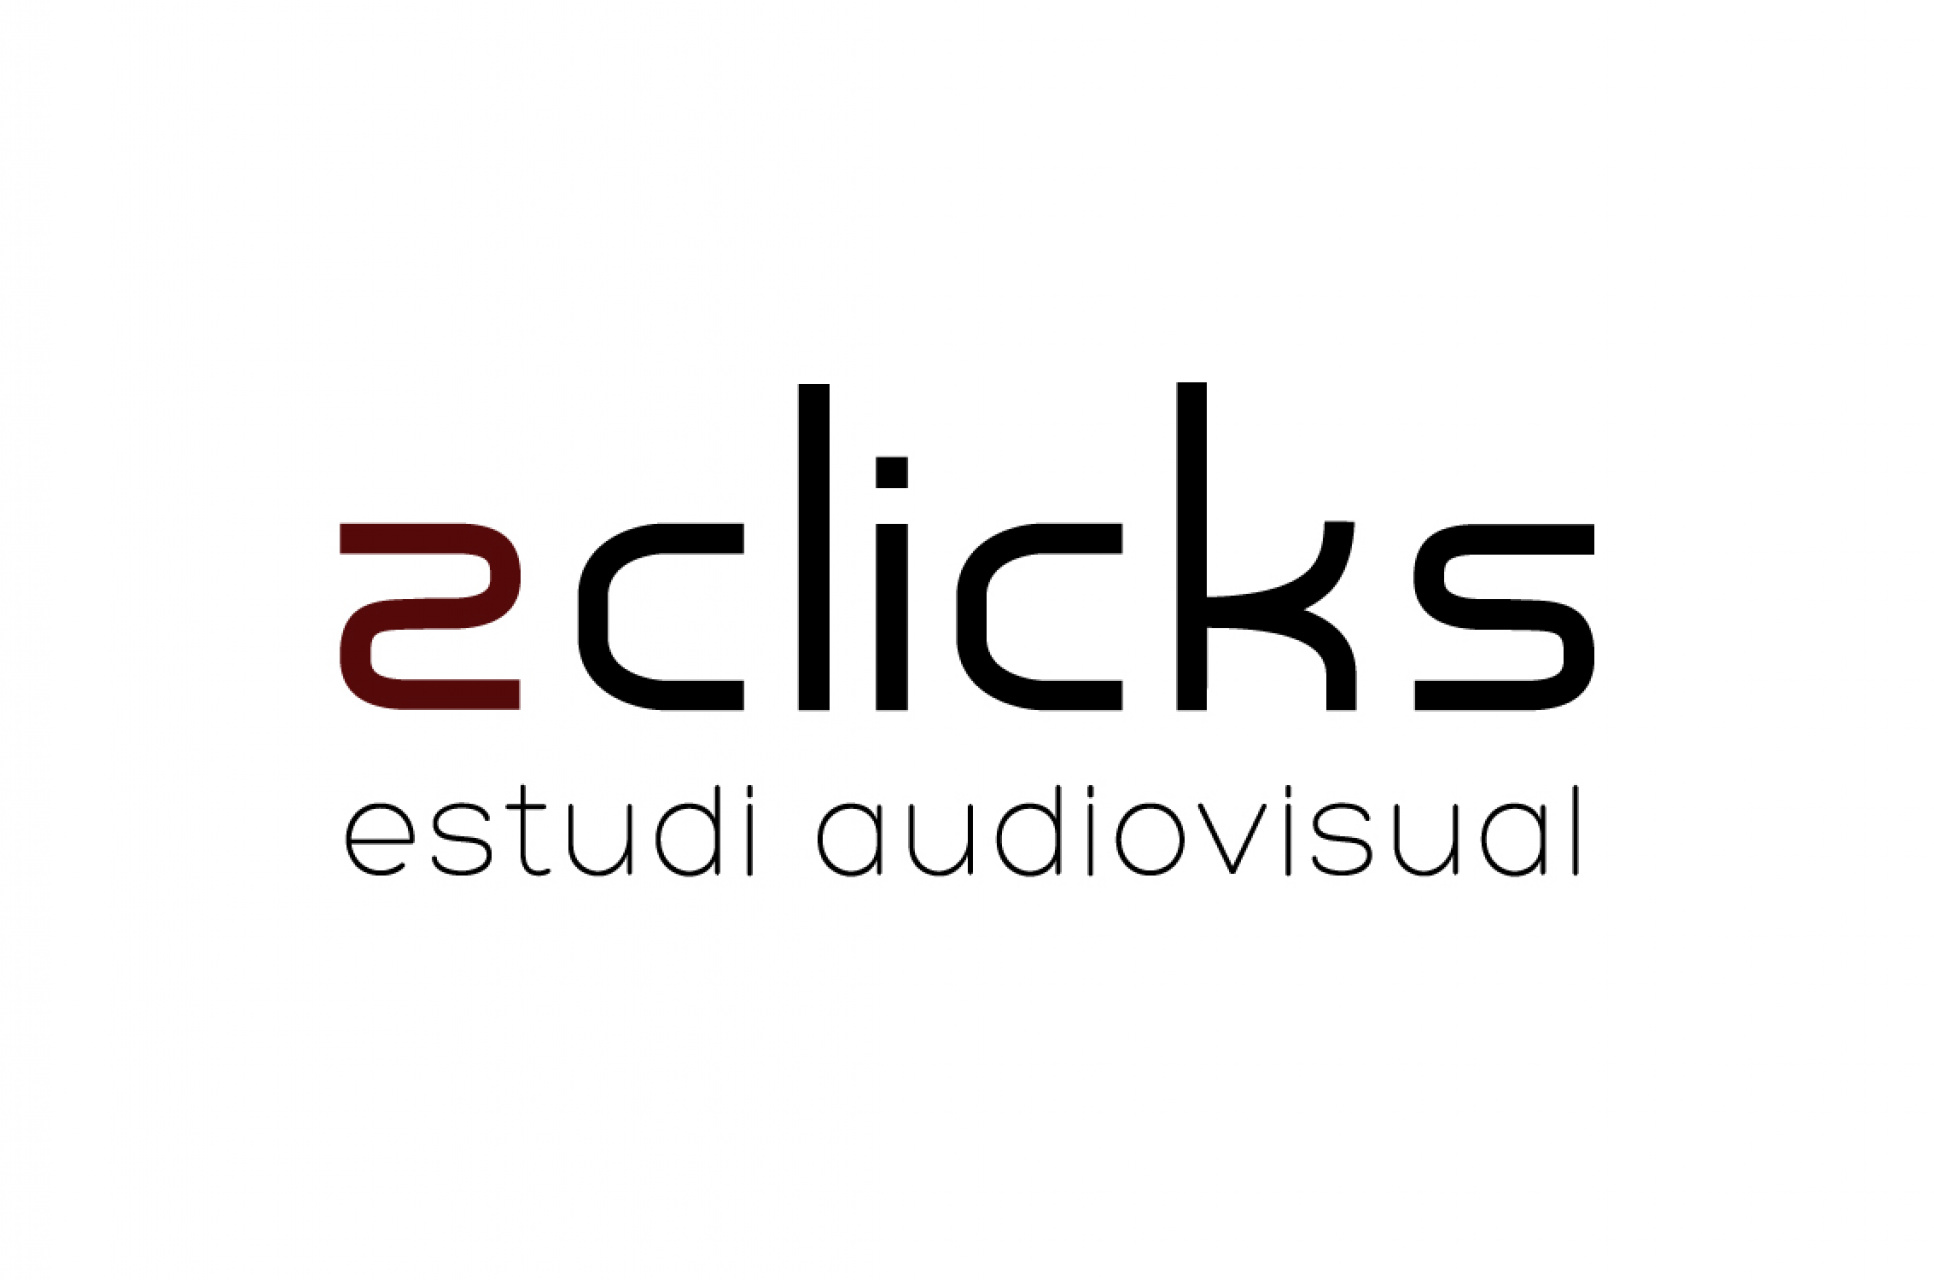 2 clicks audiovisual